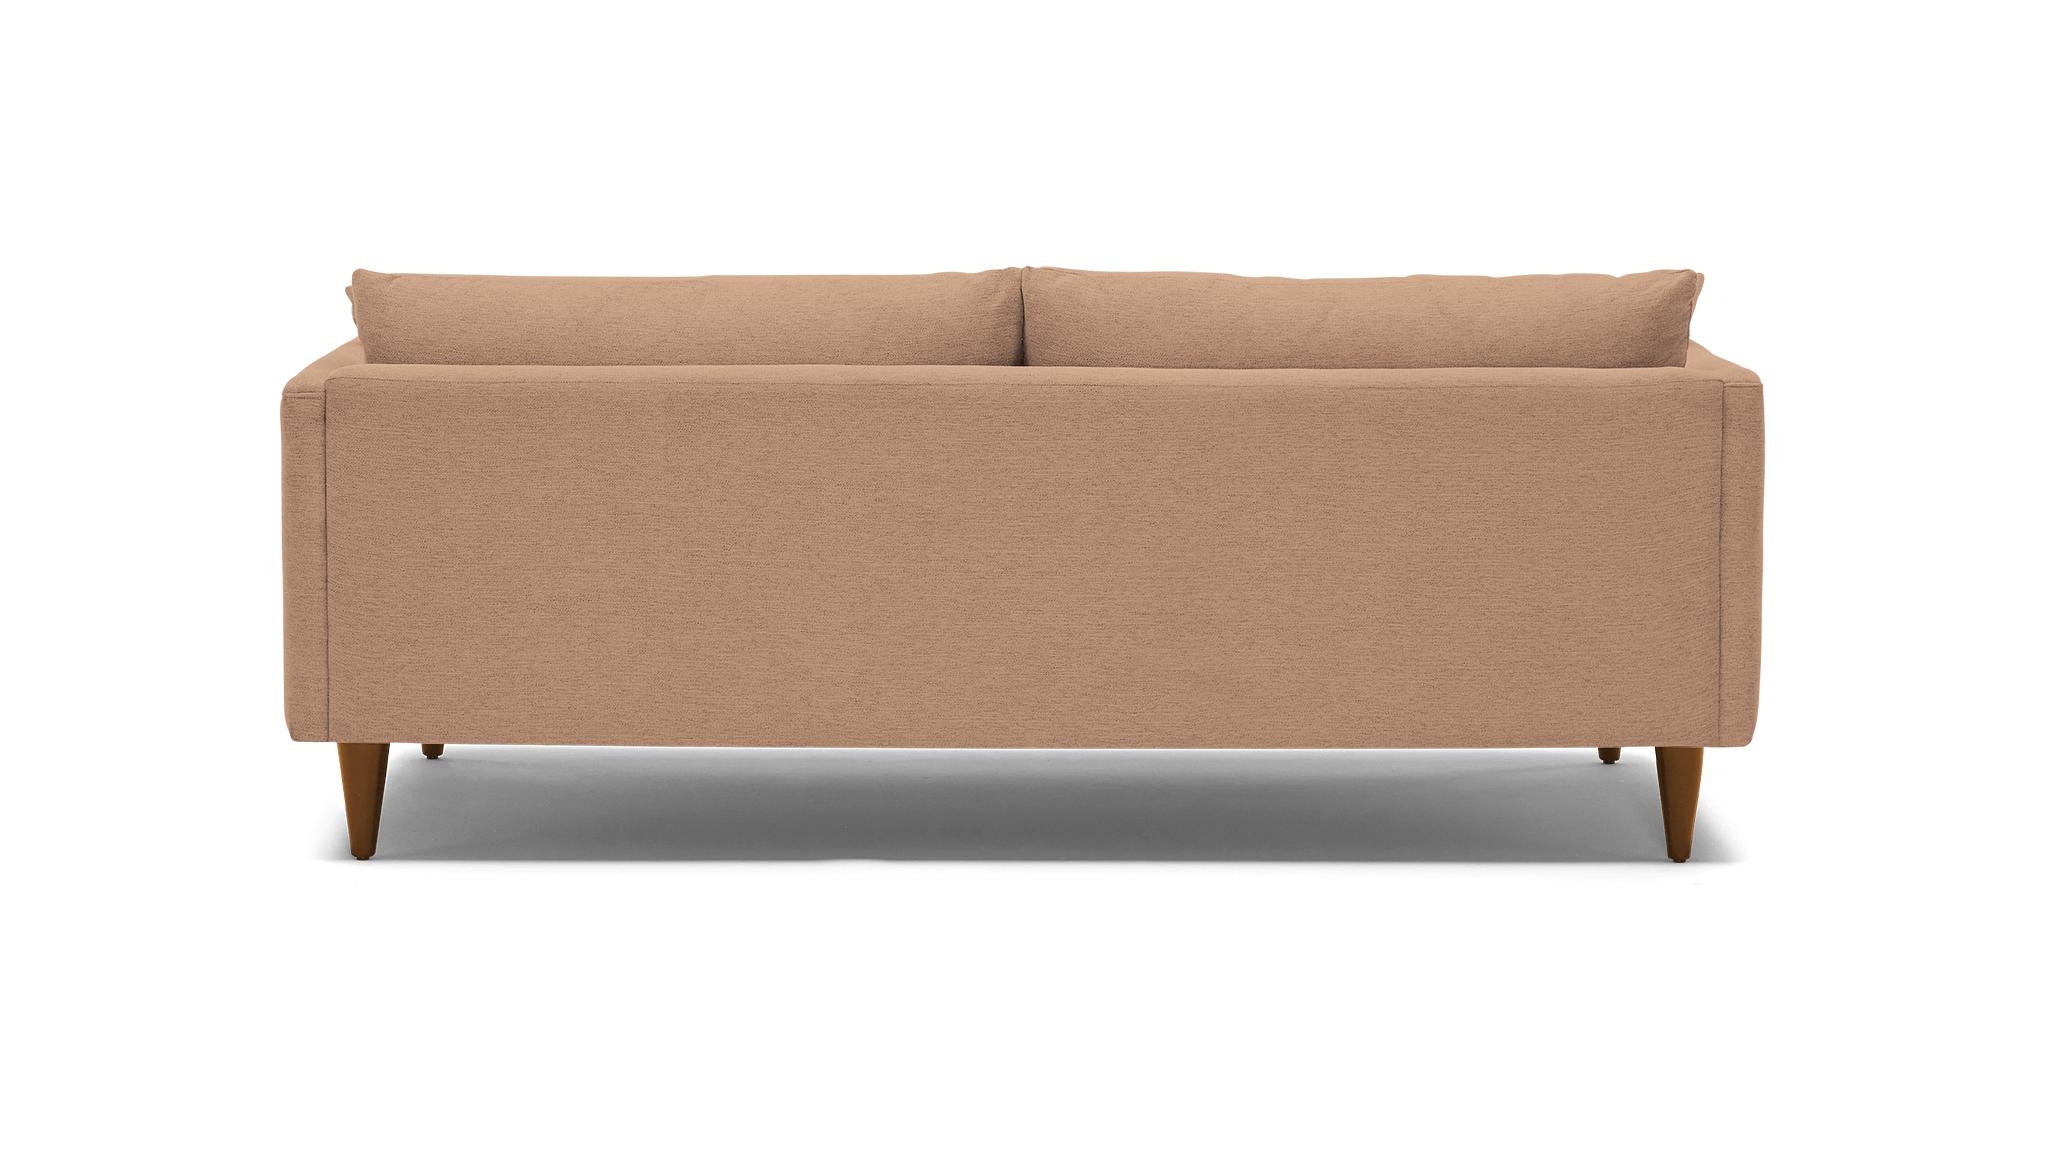 Peach Lewis Mid Century Modern Sofa - Royale Blush - Mocha - Cone - Image 4